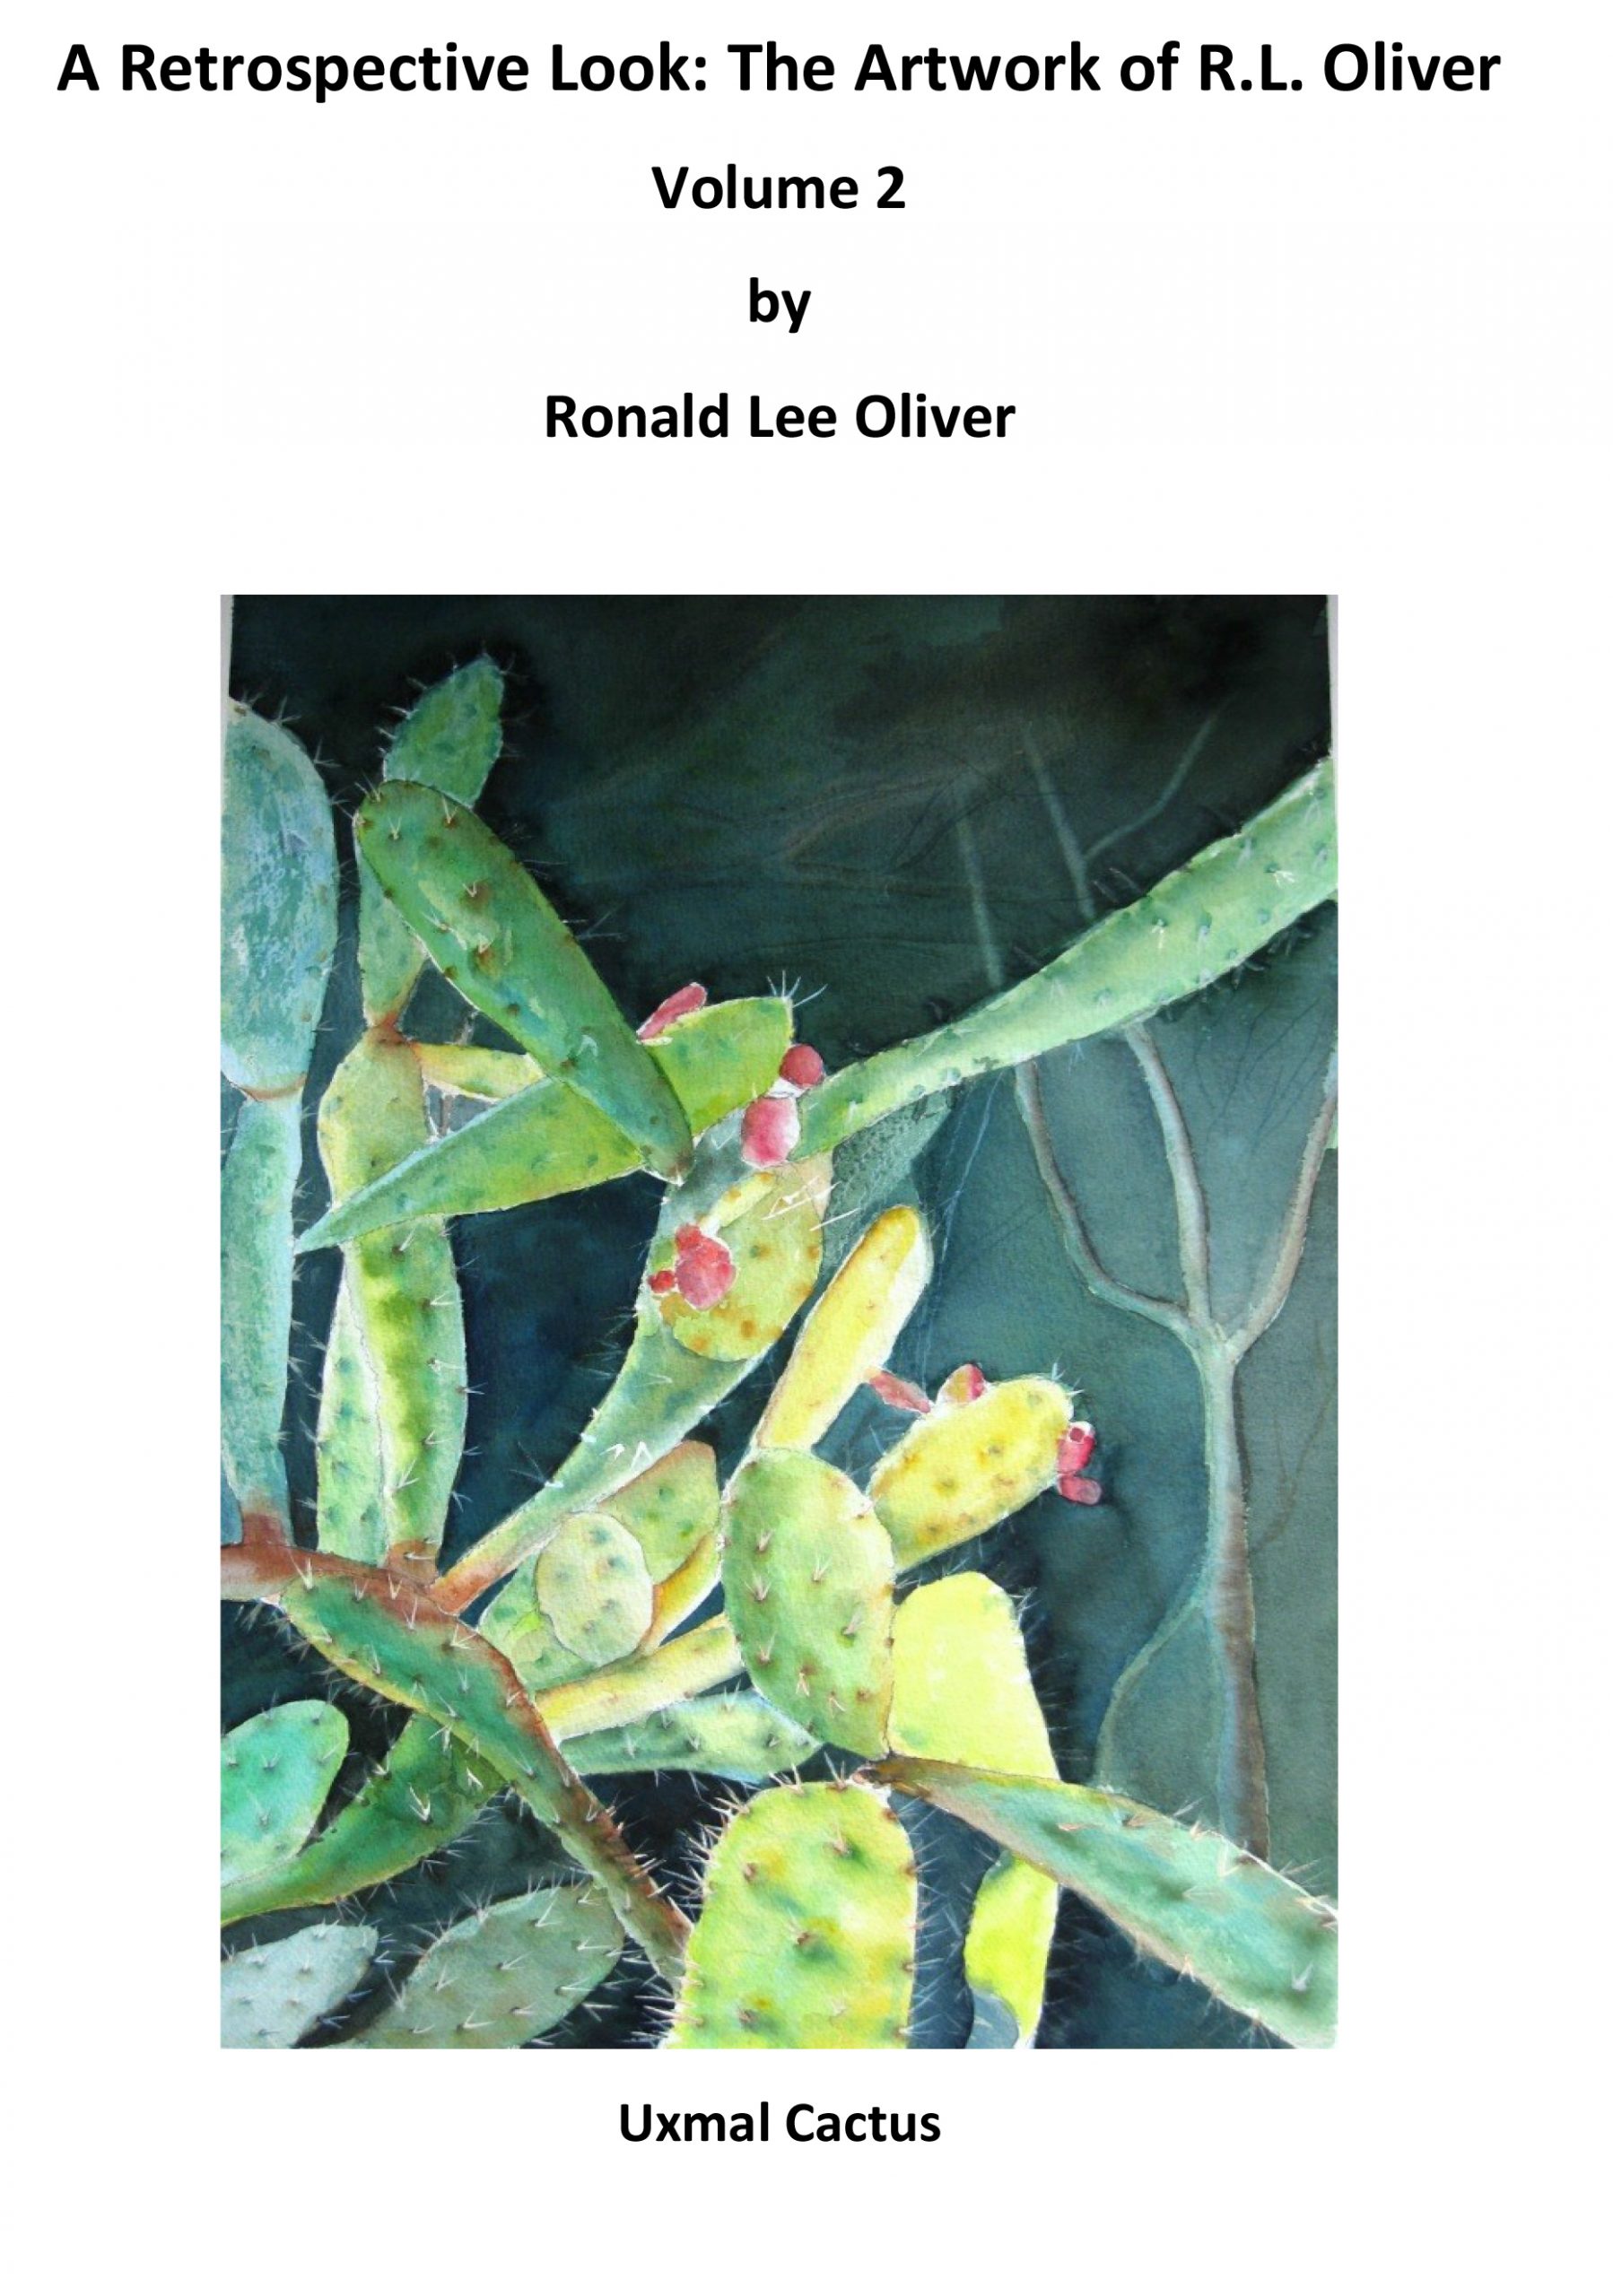 A Retrospective Look Volume II: The Artwork of R.L. Oliver